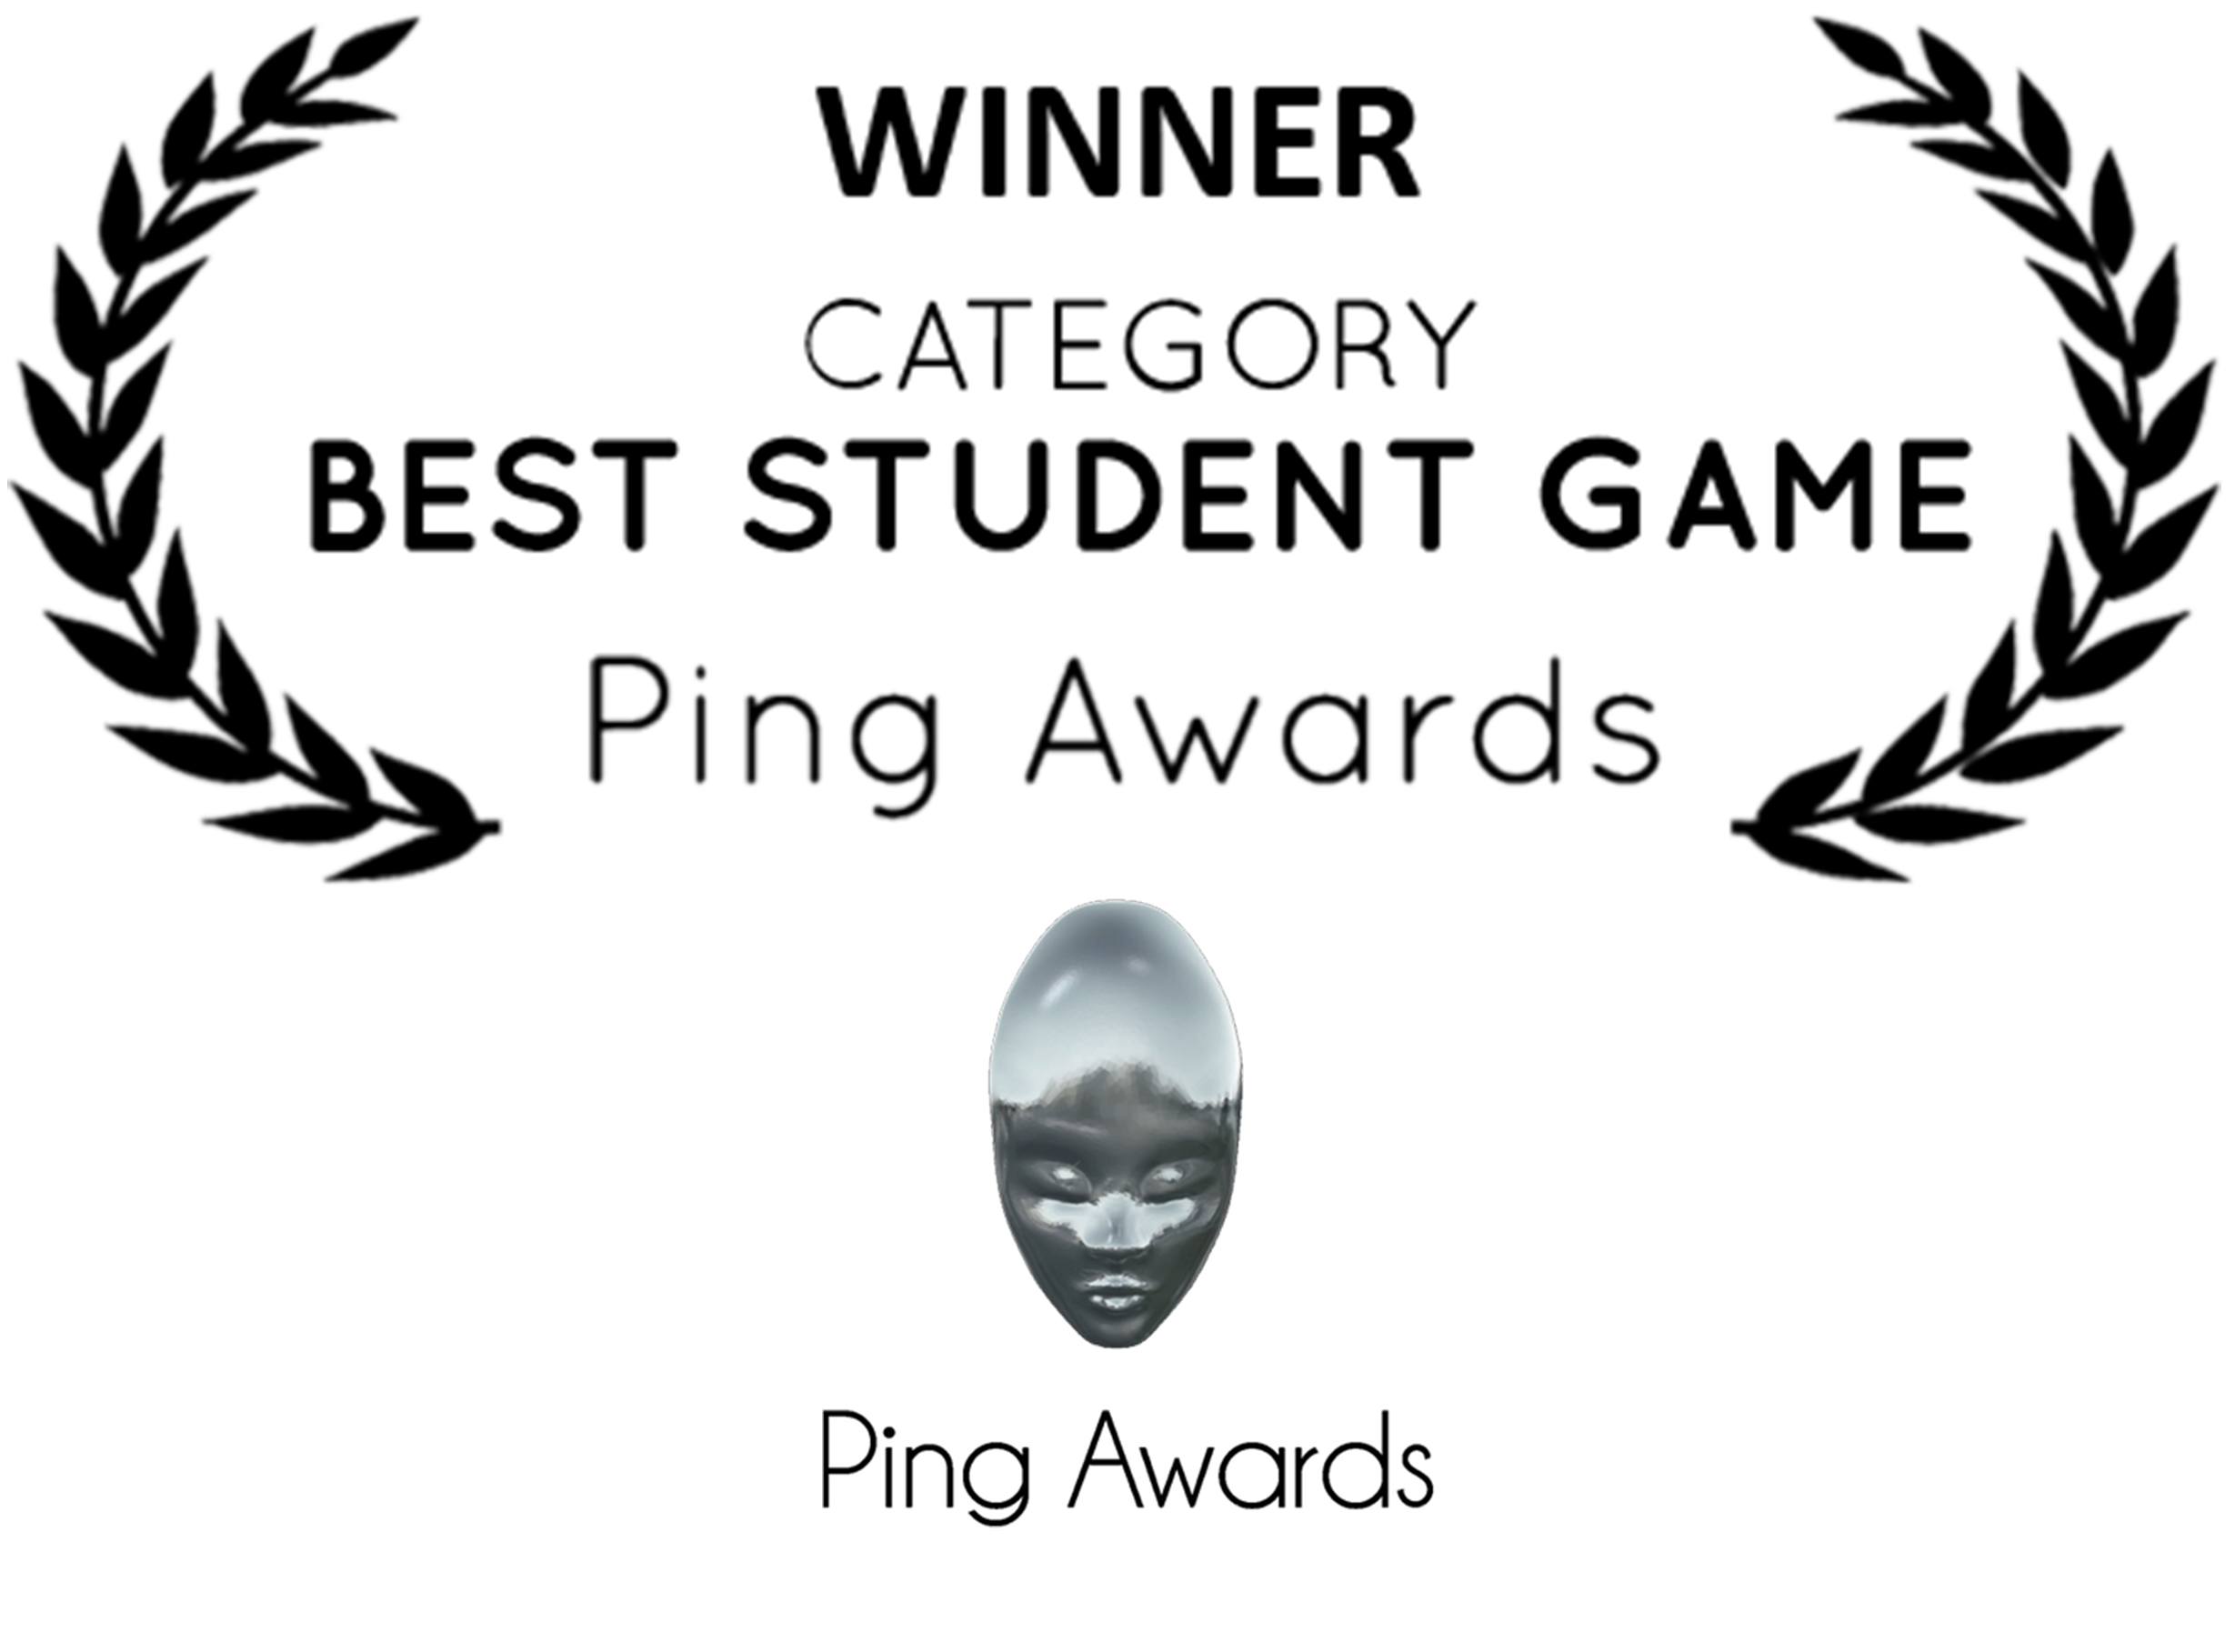 Ping Awards 2018 - Winner